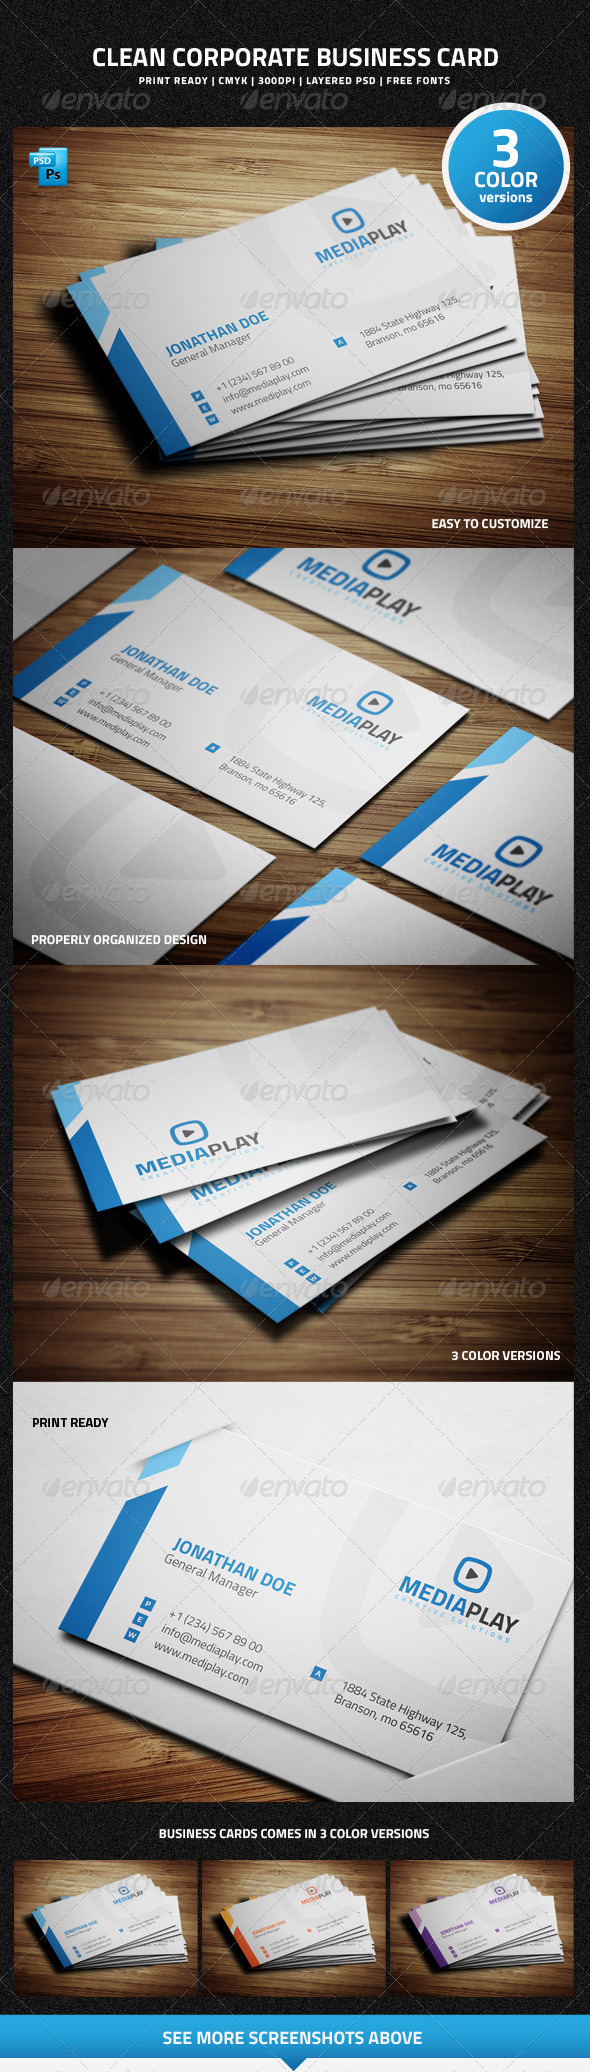 Clean Corporate Business Card (Corporate)